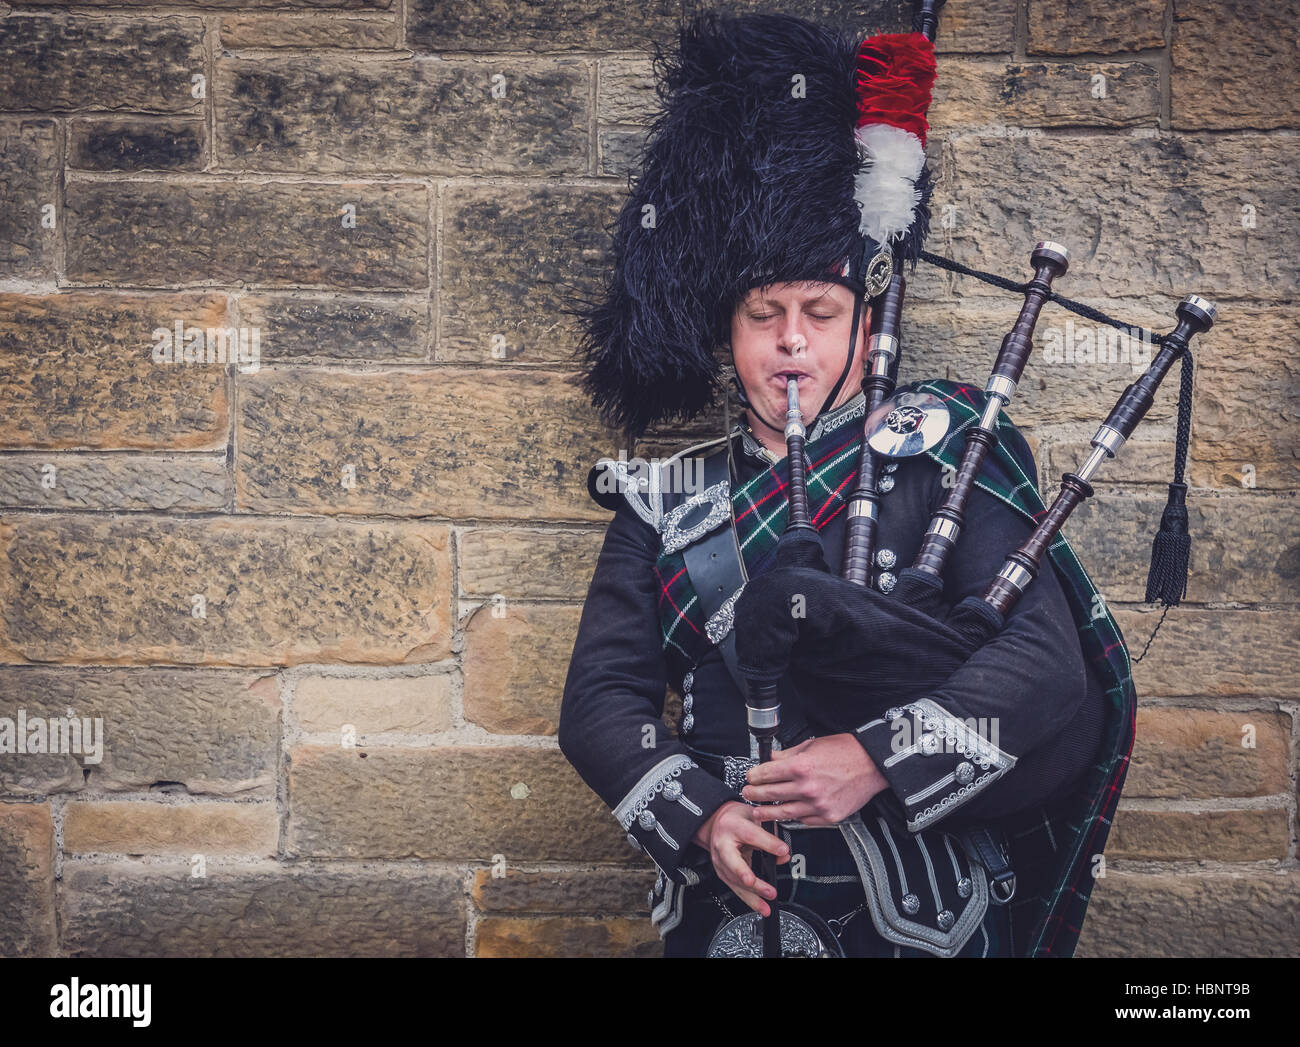 Man playing bagpipes in Edinburgh Stock Photo